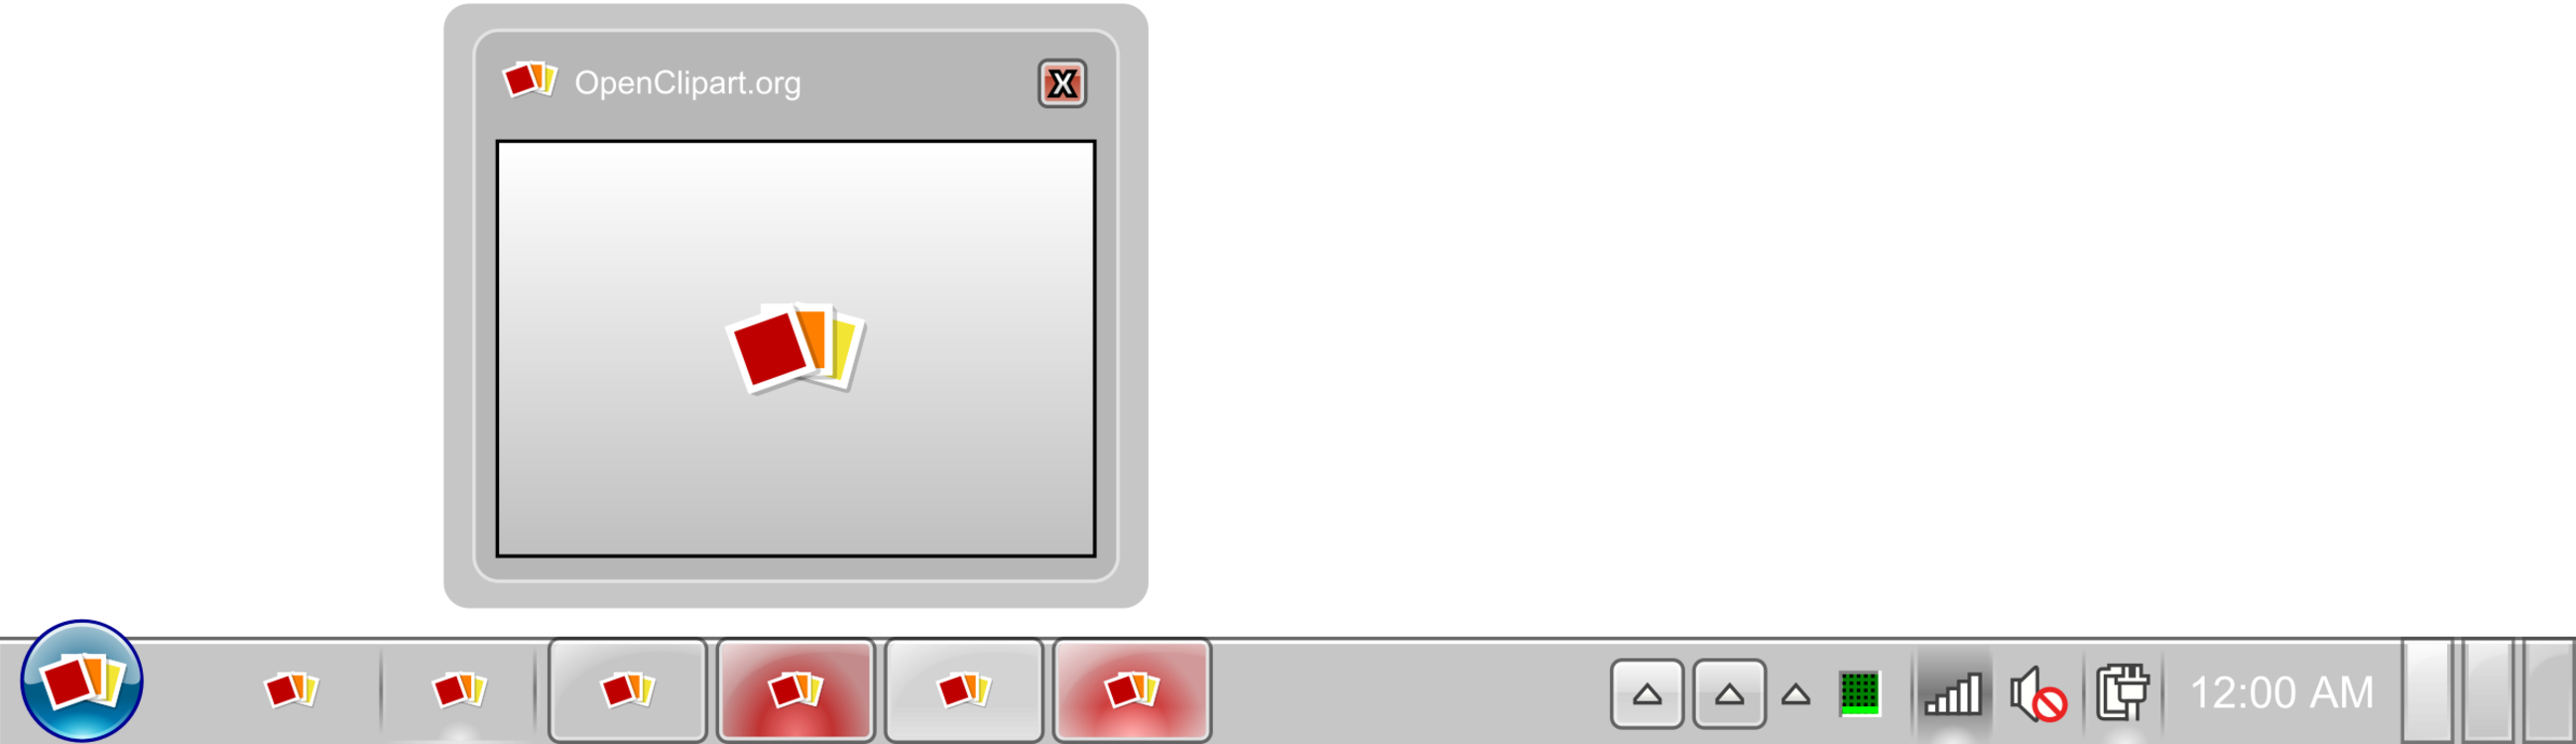 Taskbar Windows 7 Computer Icons Button - Windows 7 Taskbar Png (2597x750), Png Download